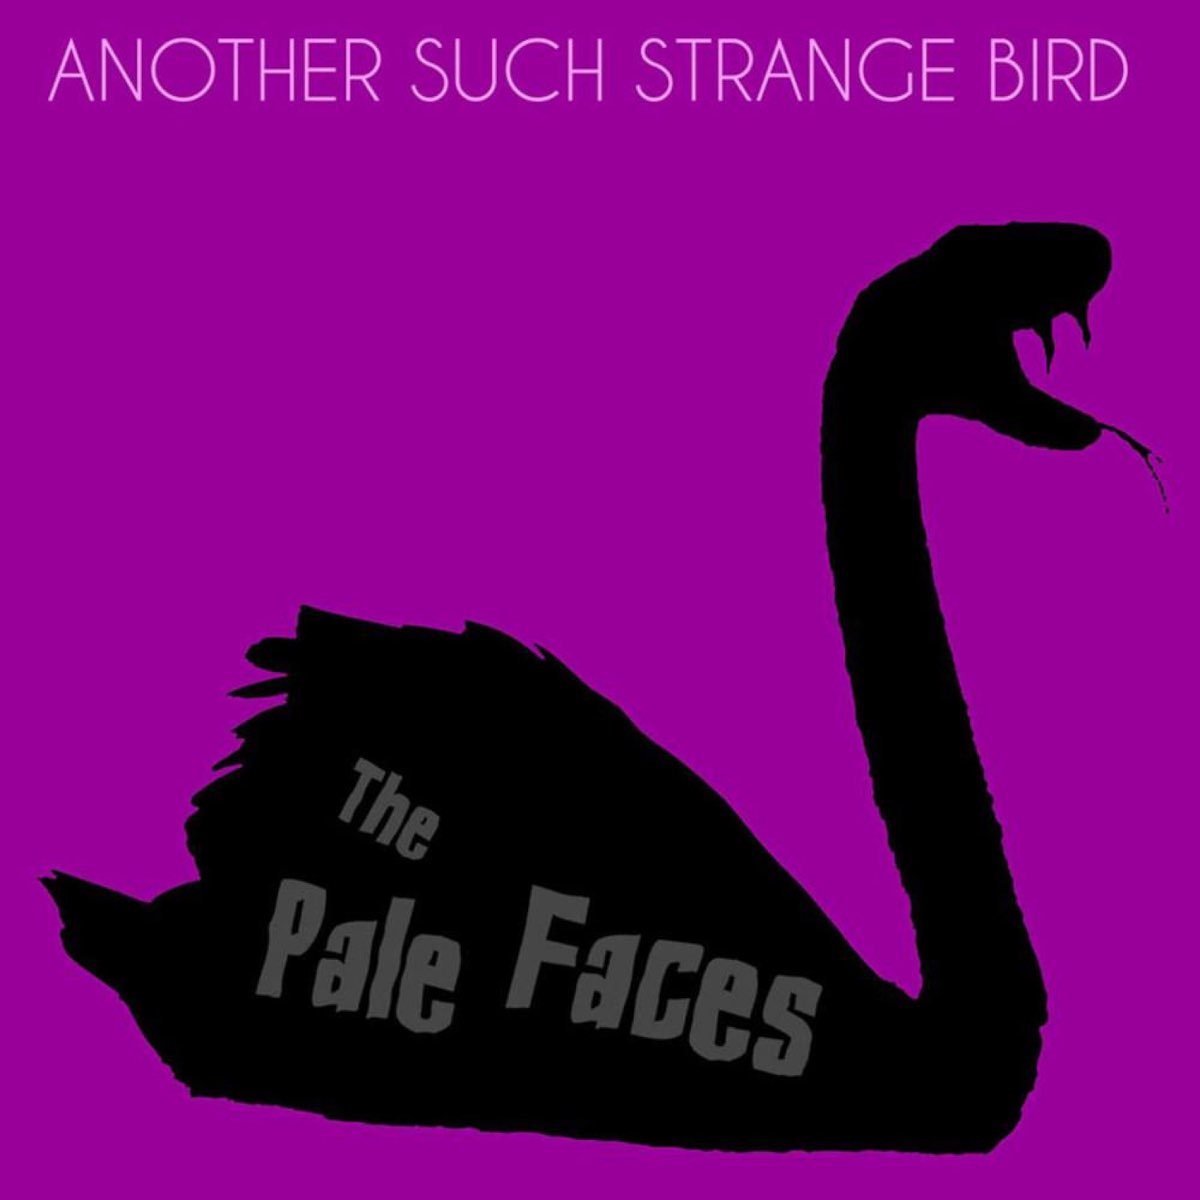 Super Birds обложка. Birdy Strange Birds Ноты. Kuma the Bird обложки песен. Paleface logo. Such another